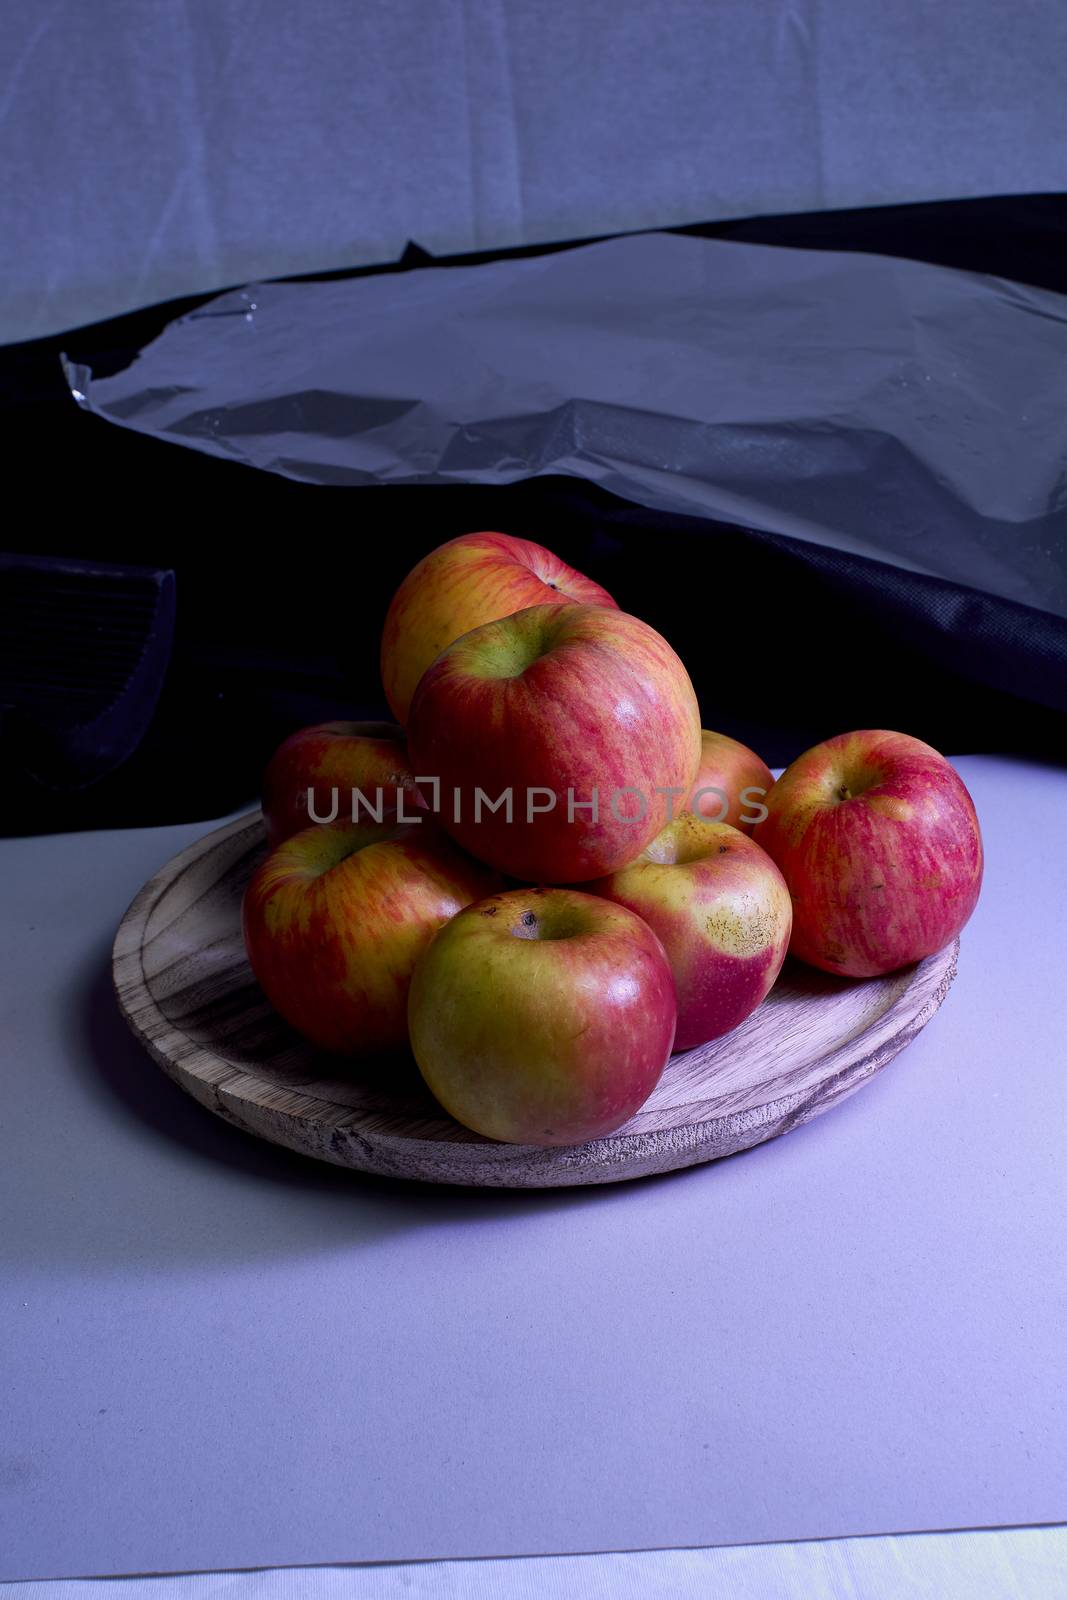 Apples on wooden plate, Red, black background, wooden tile